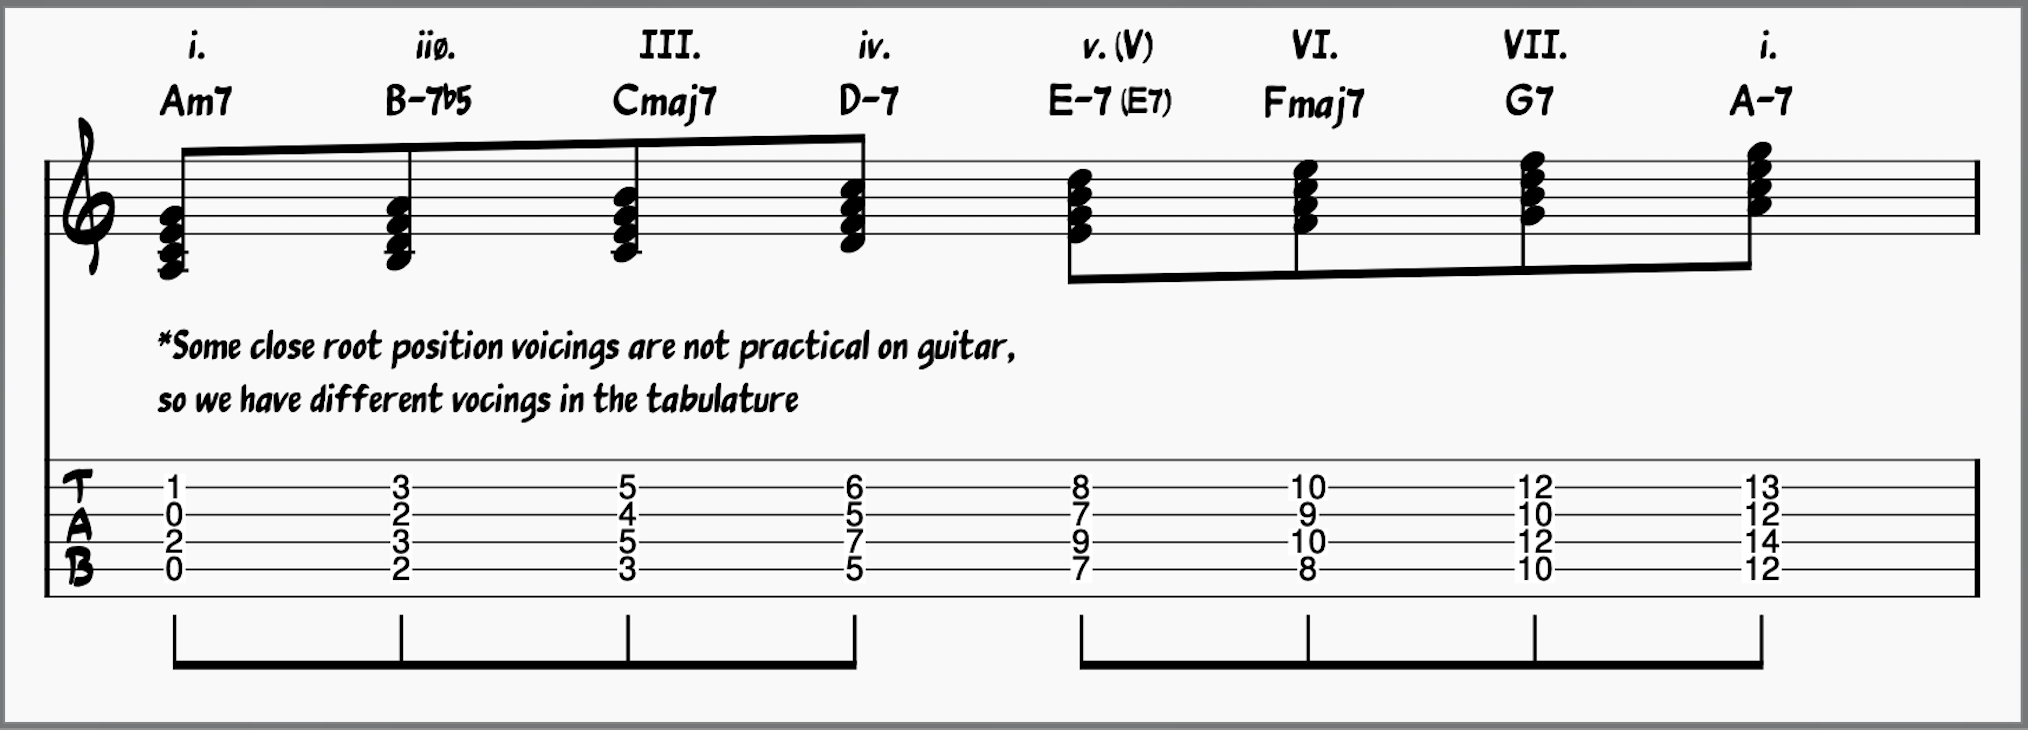 Minor Scales: A minor natural scale harmonized; minor key